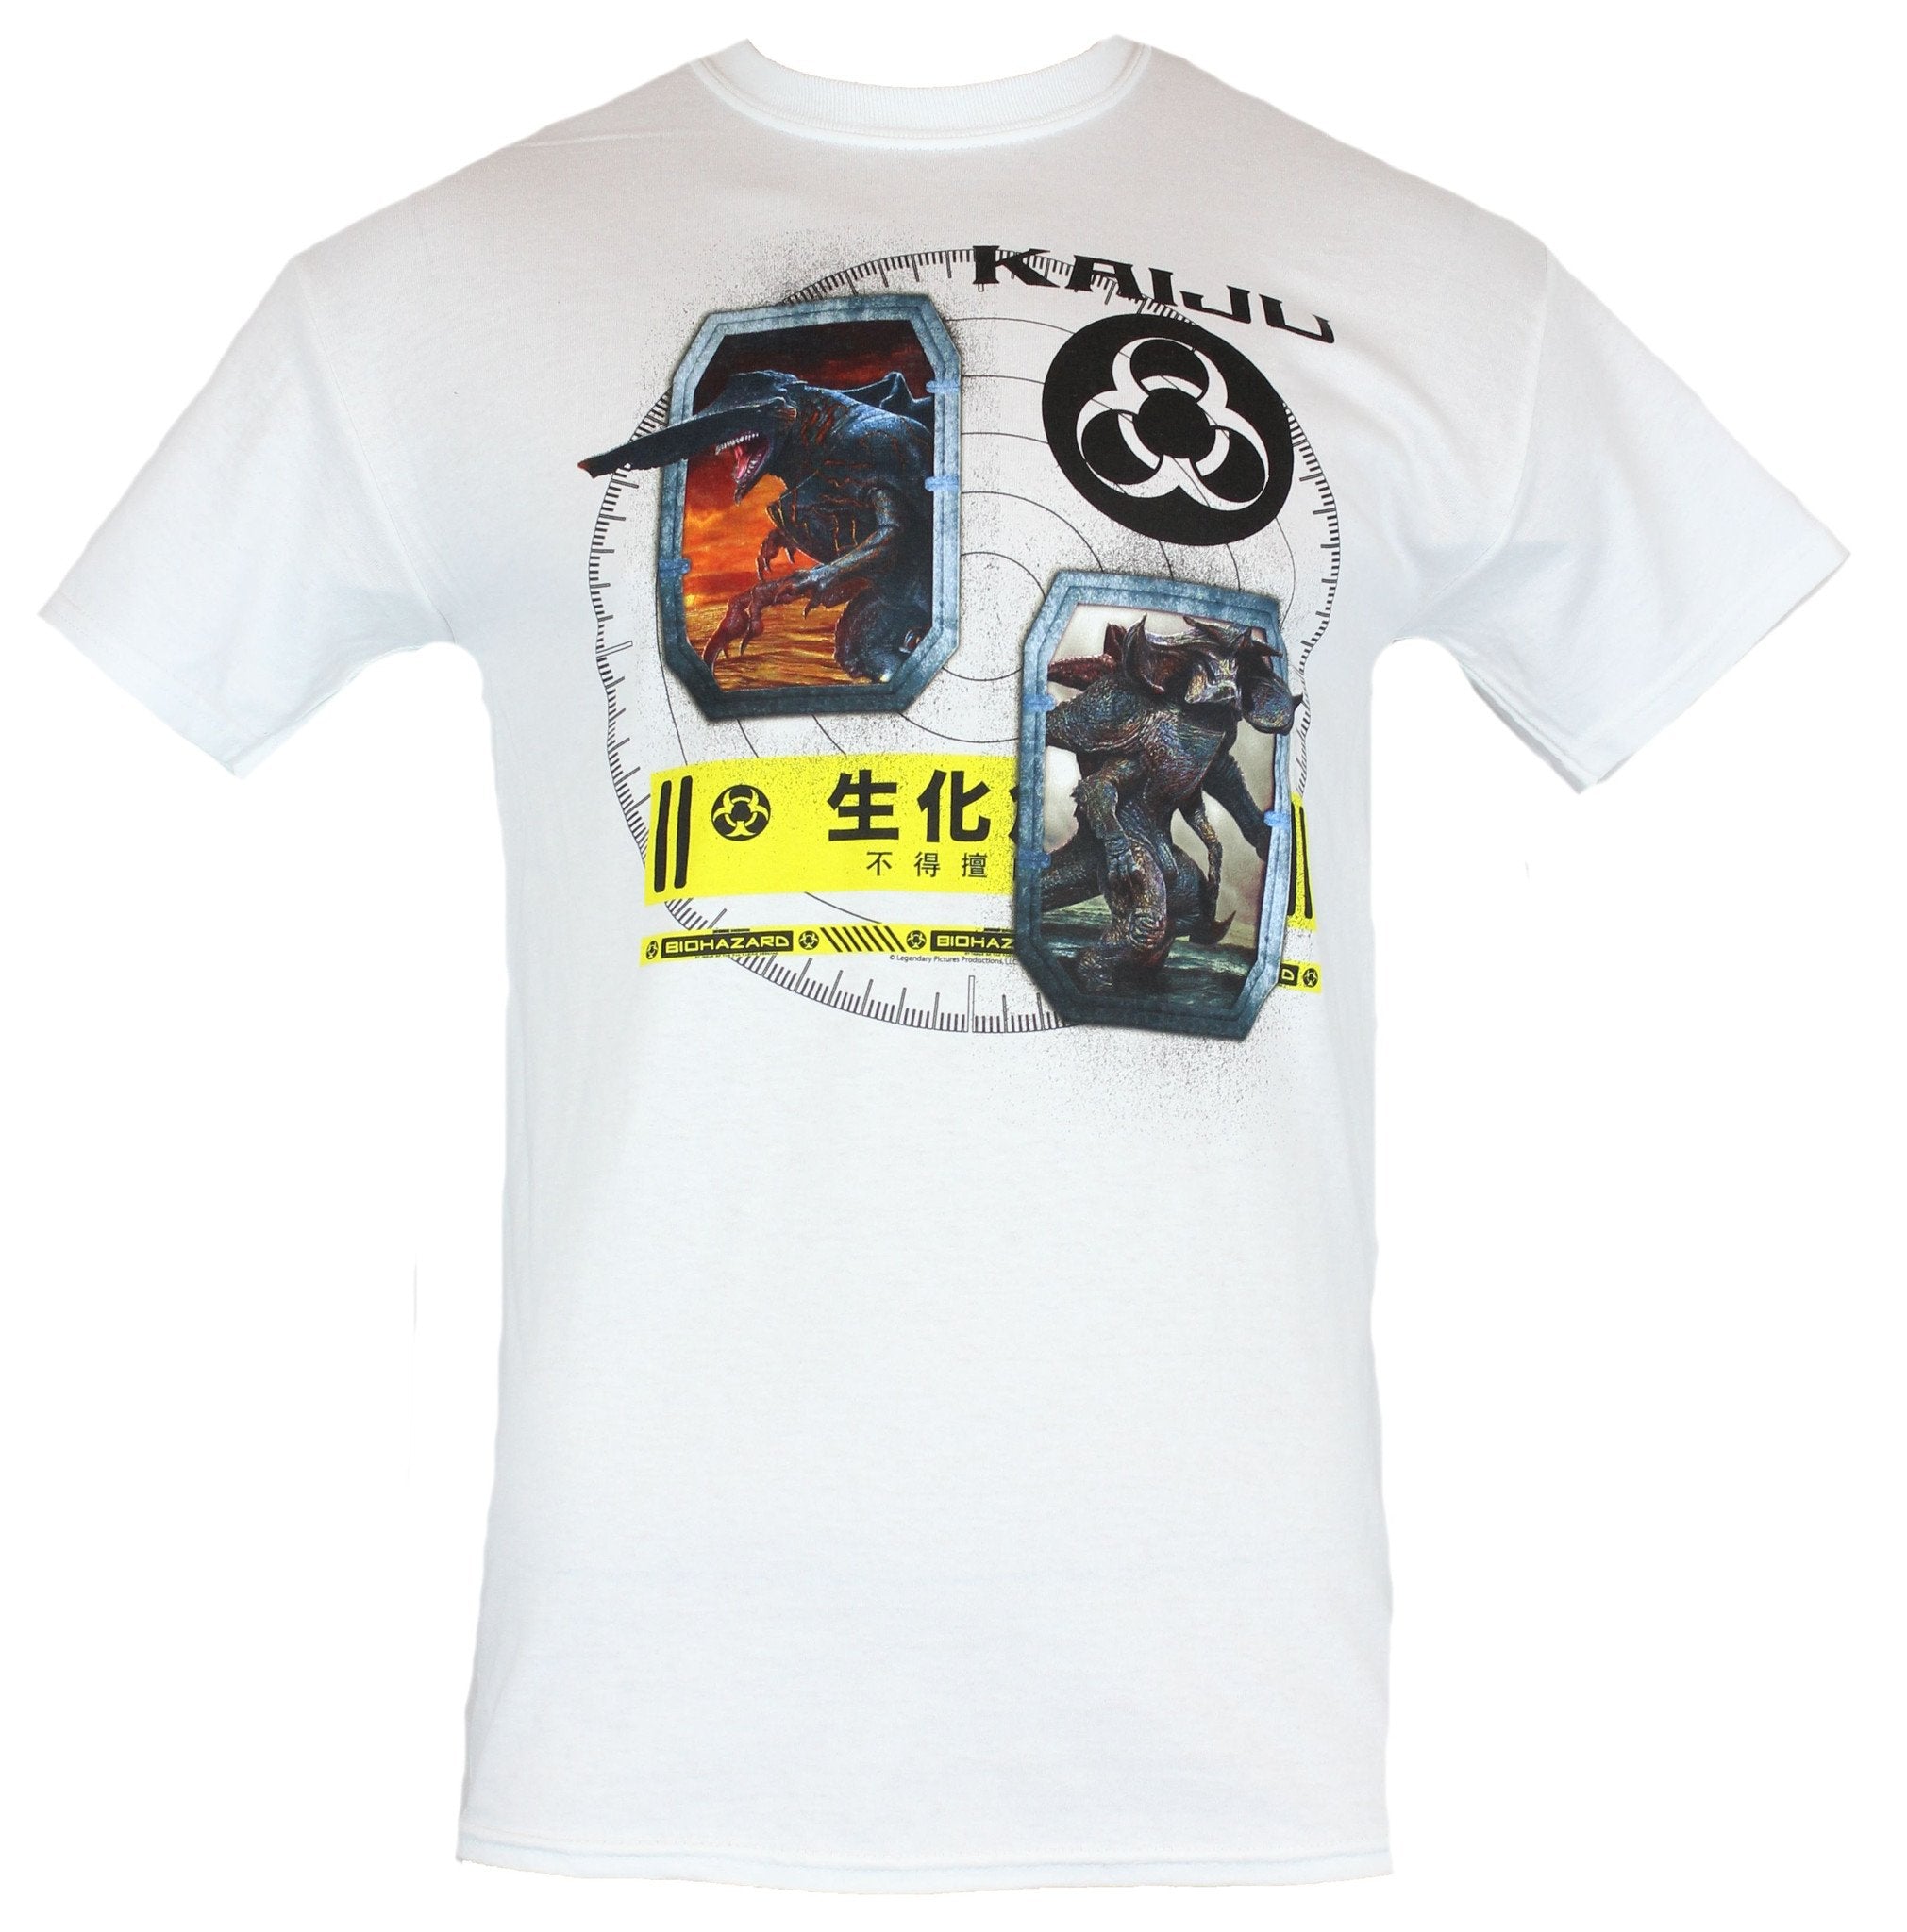 Pacfic Rim Mens T-Shirt -Kaiju Cirle Collage Image